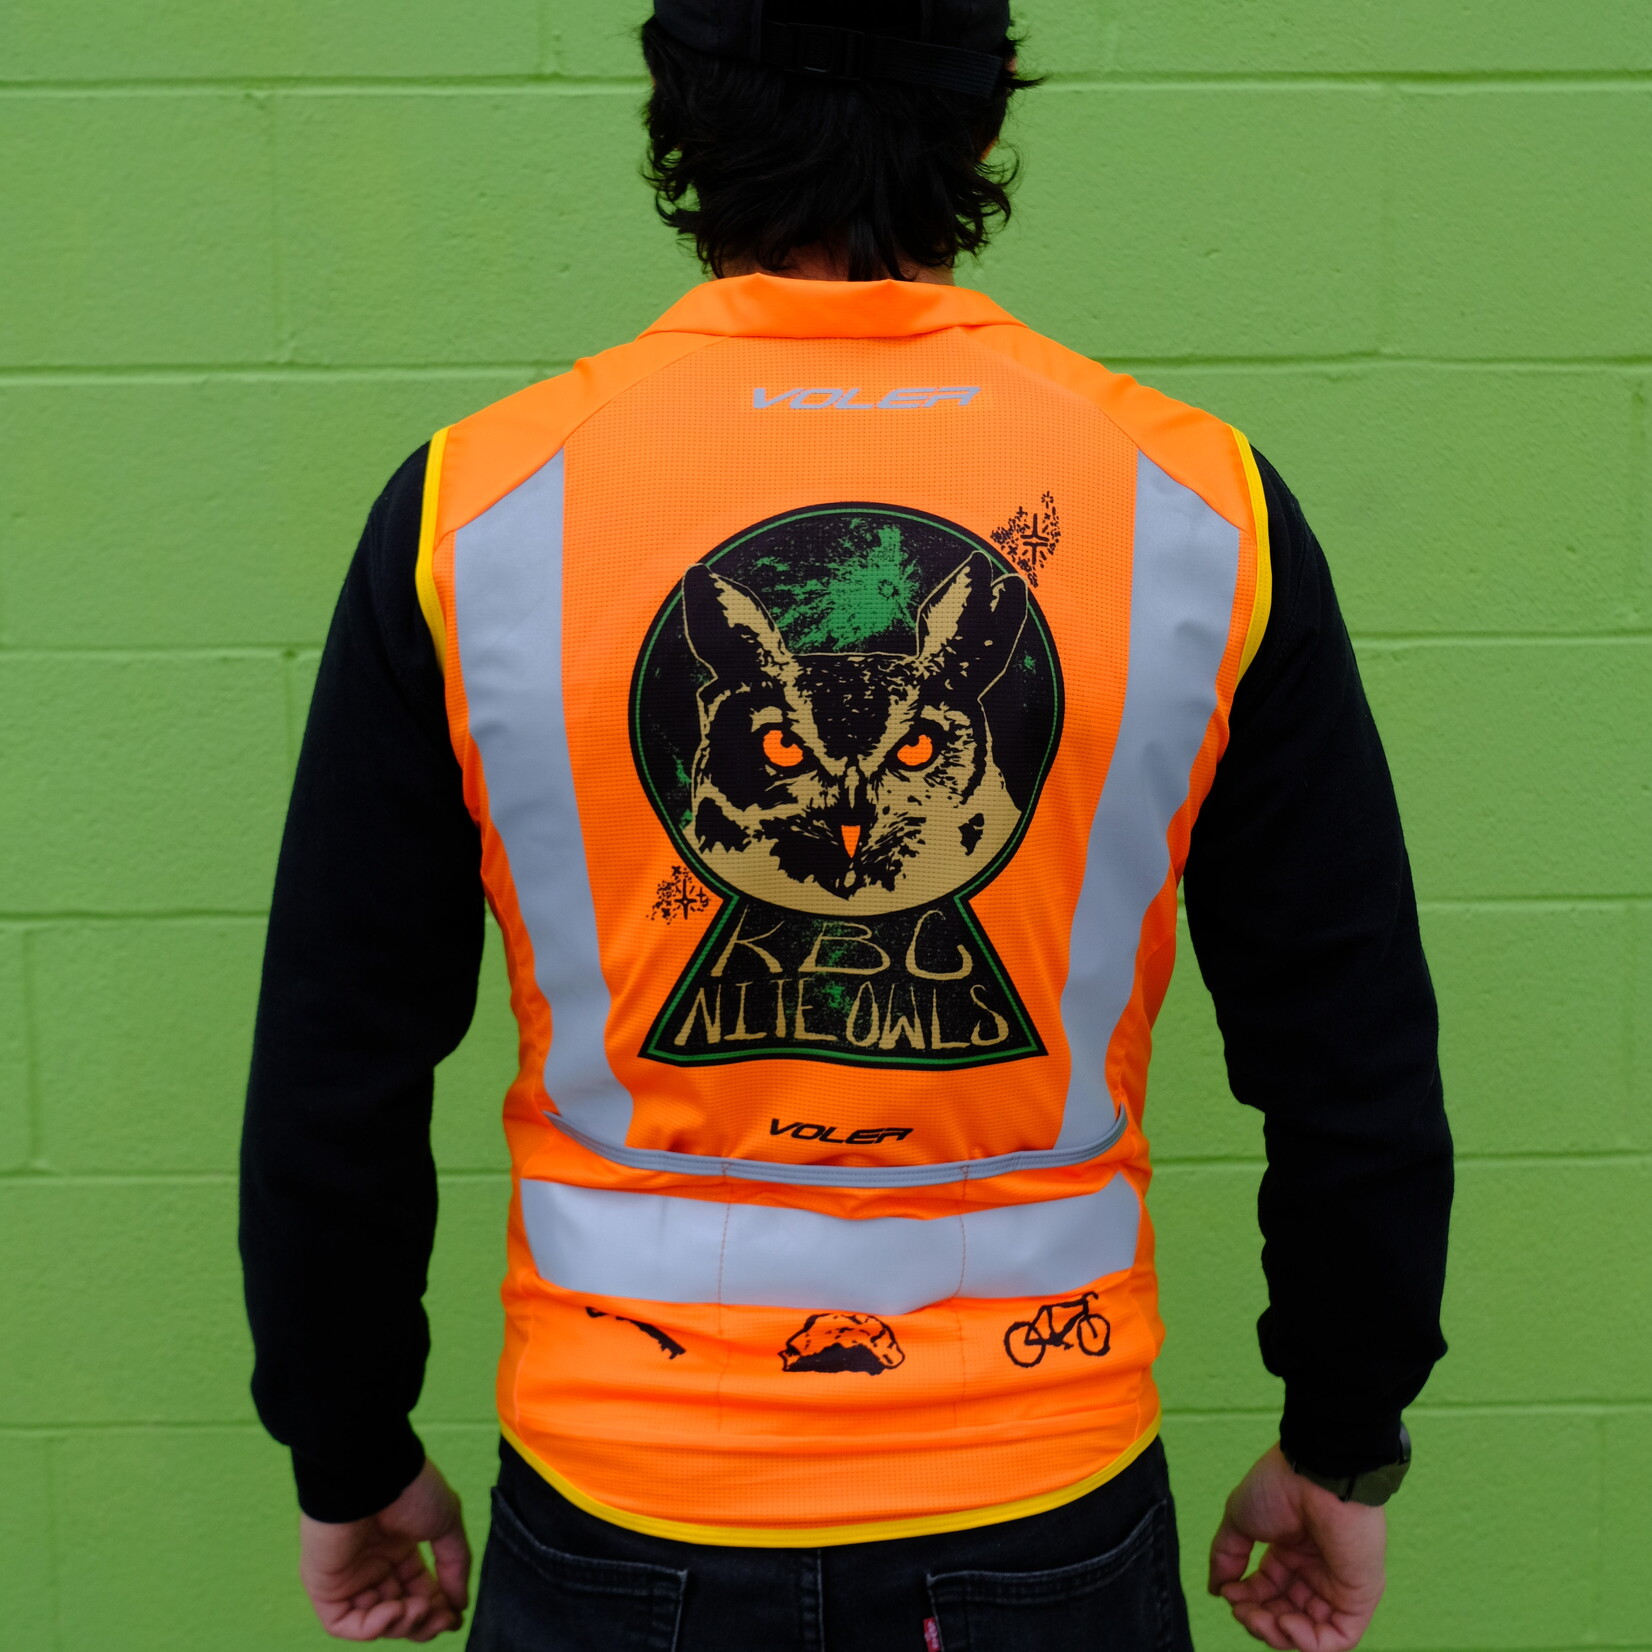 Voler KBC Night Owls Reflective Vest